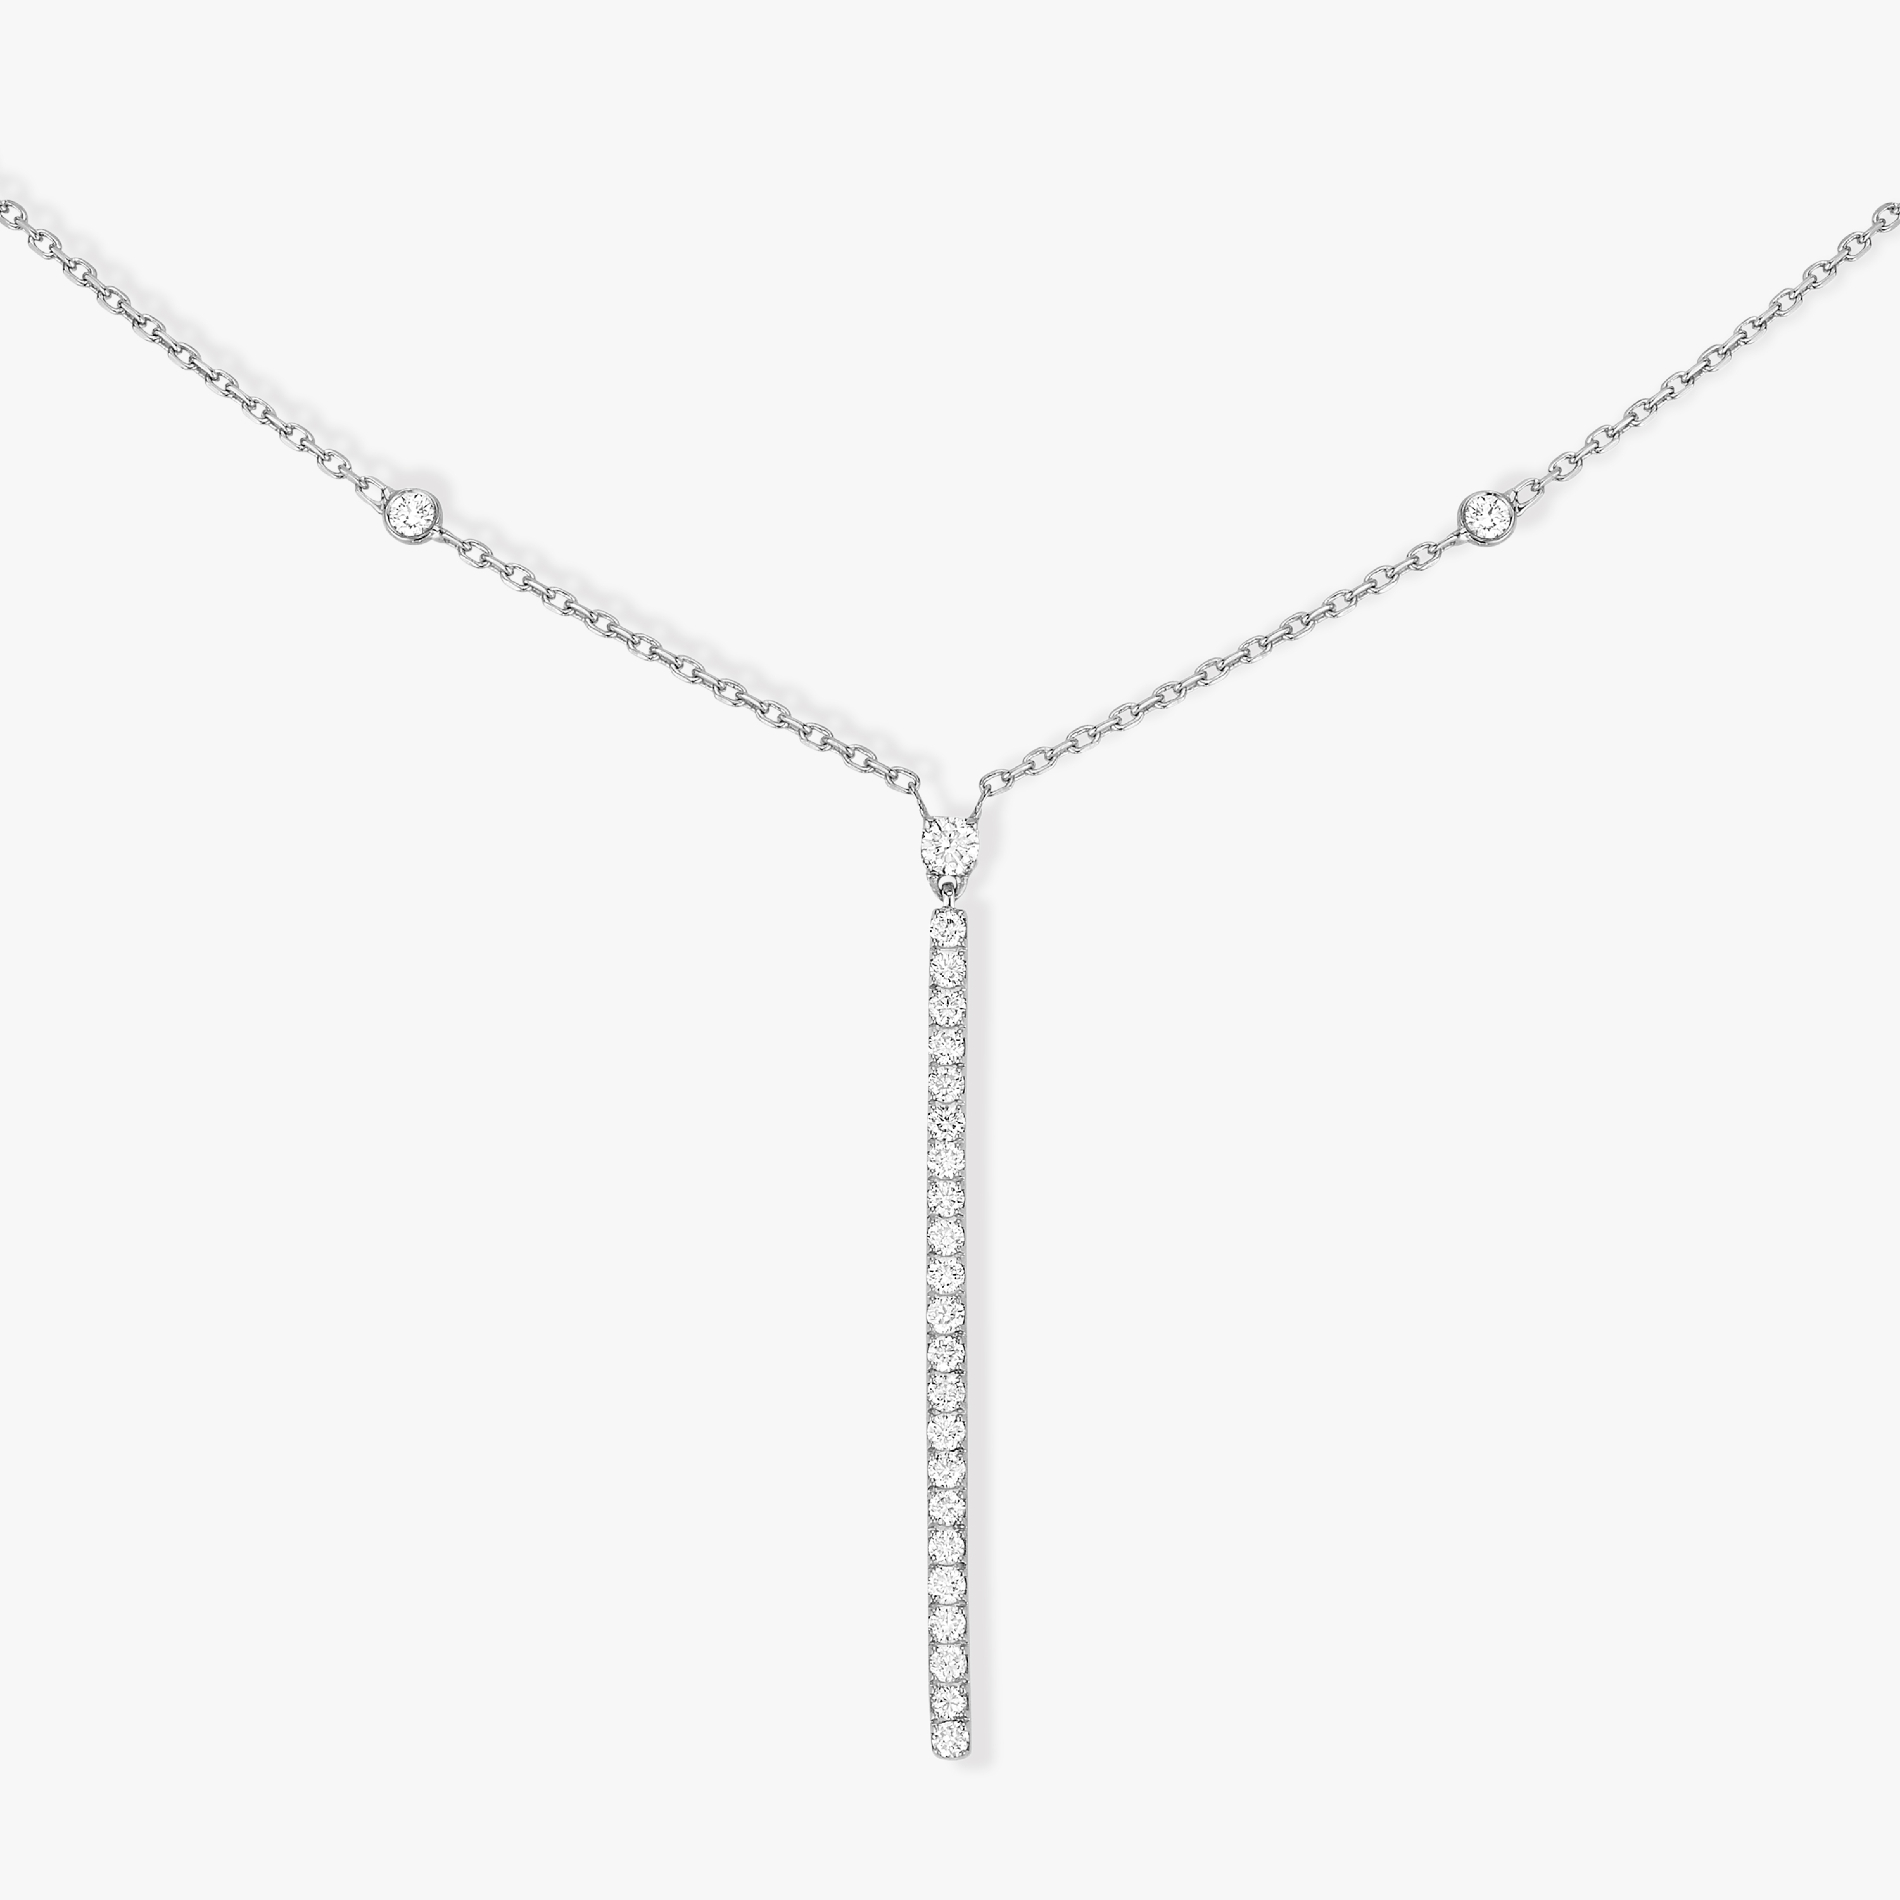 Bypass Curve Bar Ruby Diamond Necklace - Nazar's & Co. Jewelers